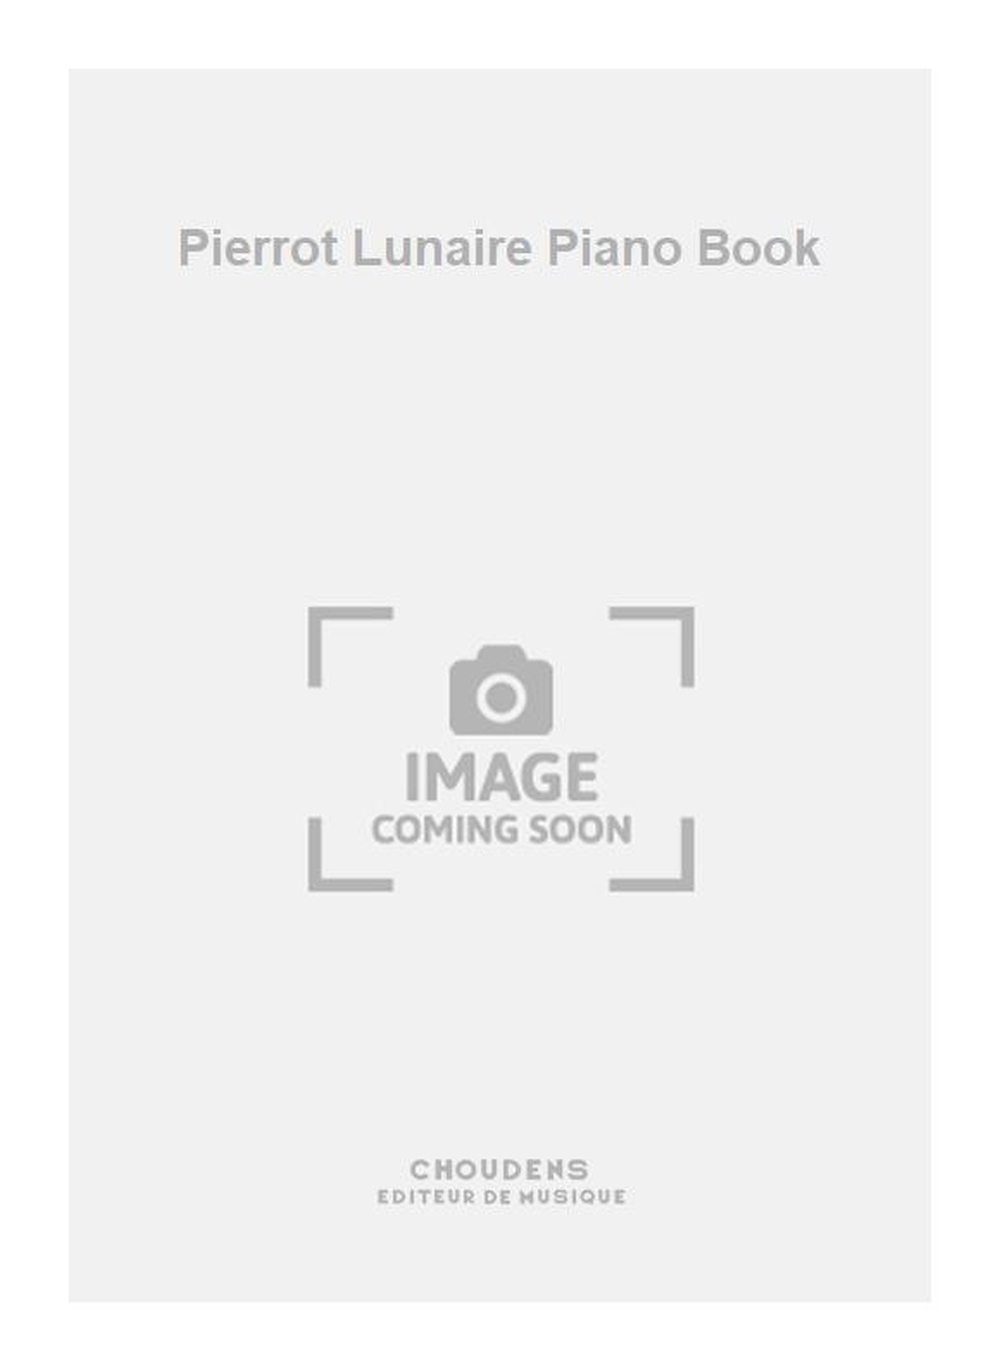 Pierrot Lunaire Piano Book